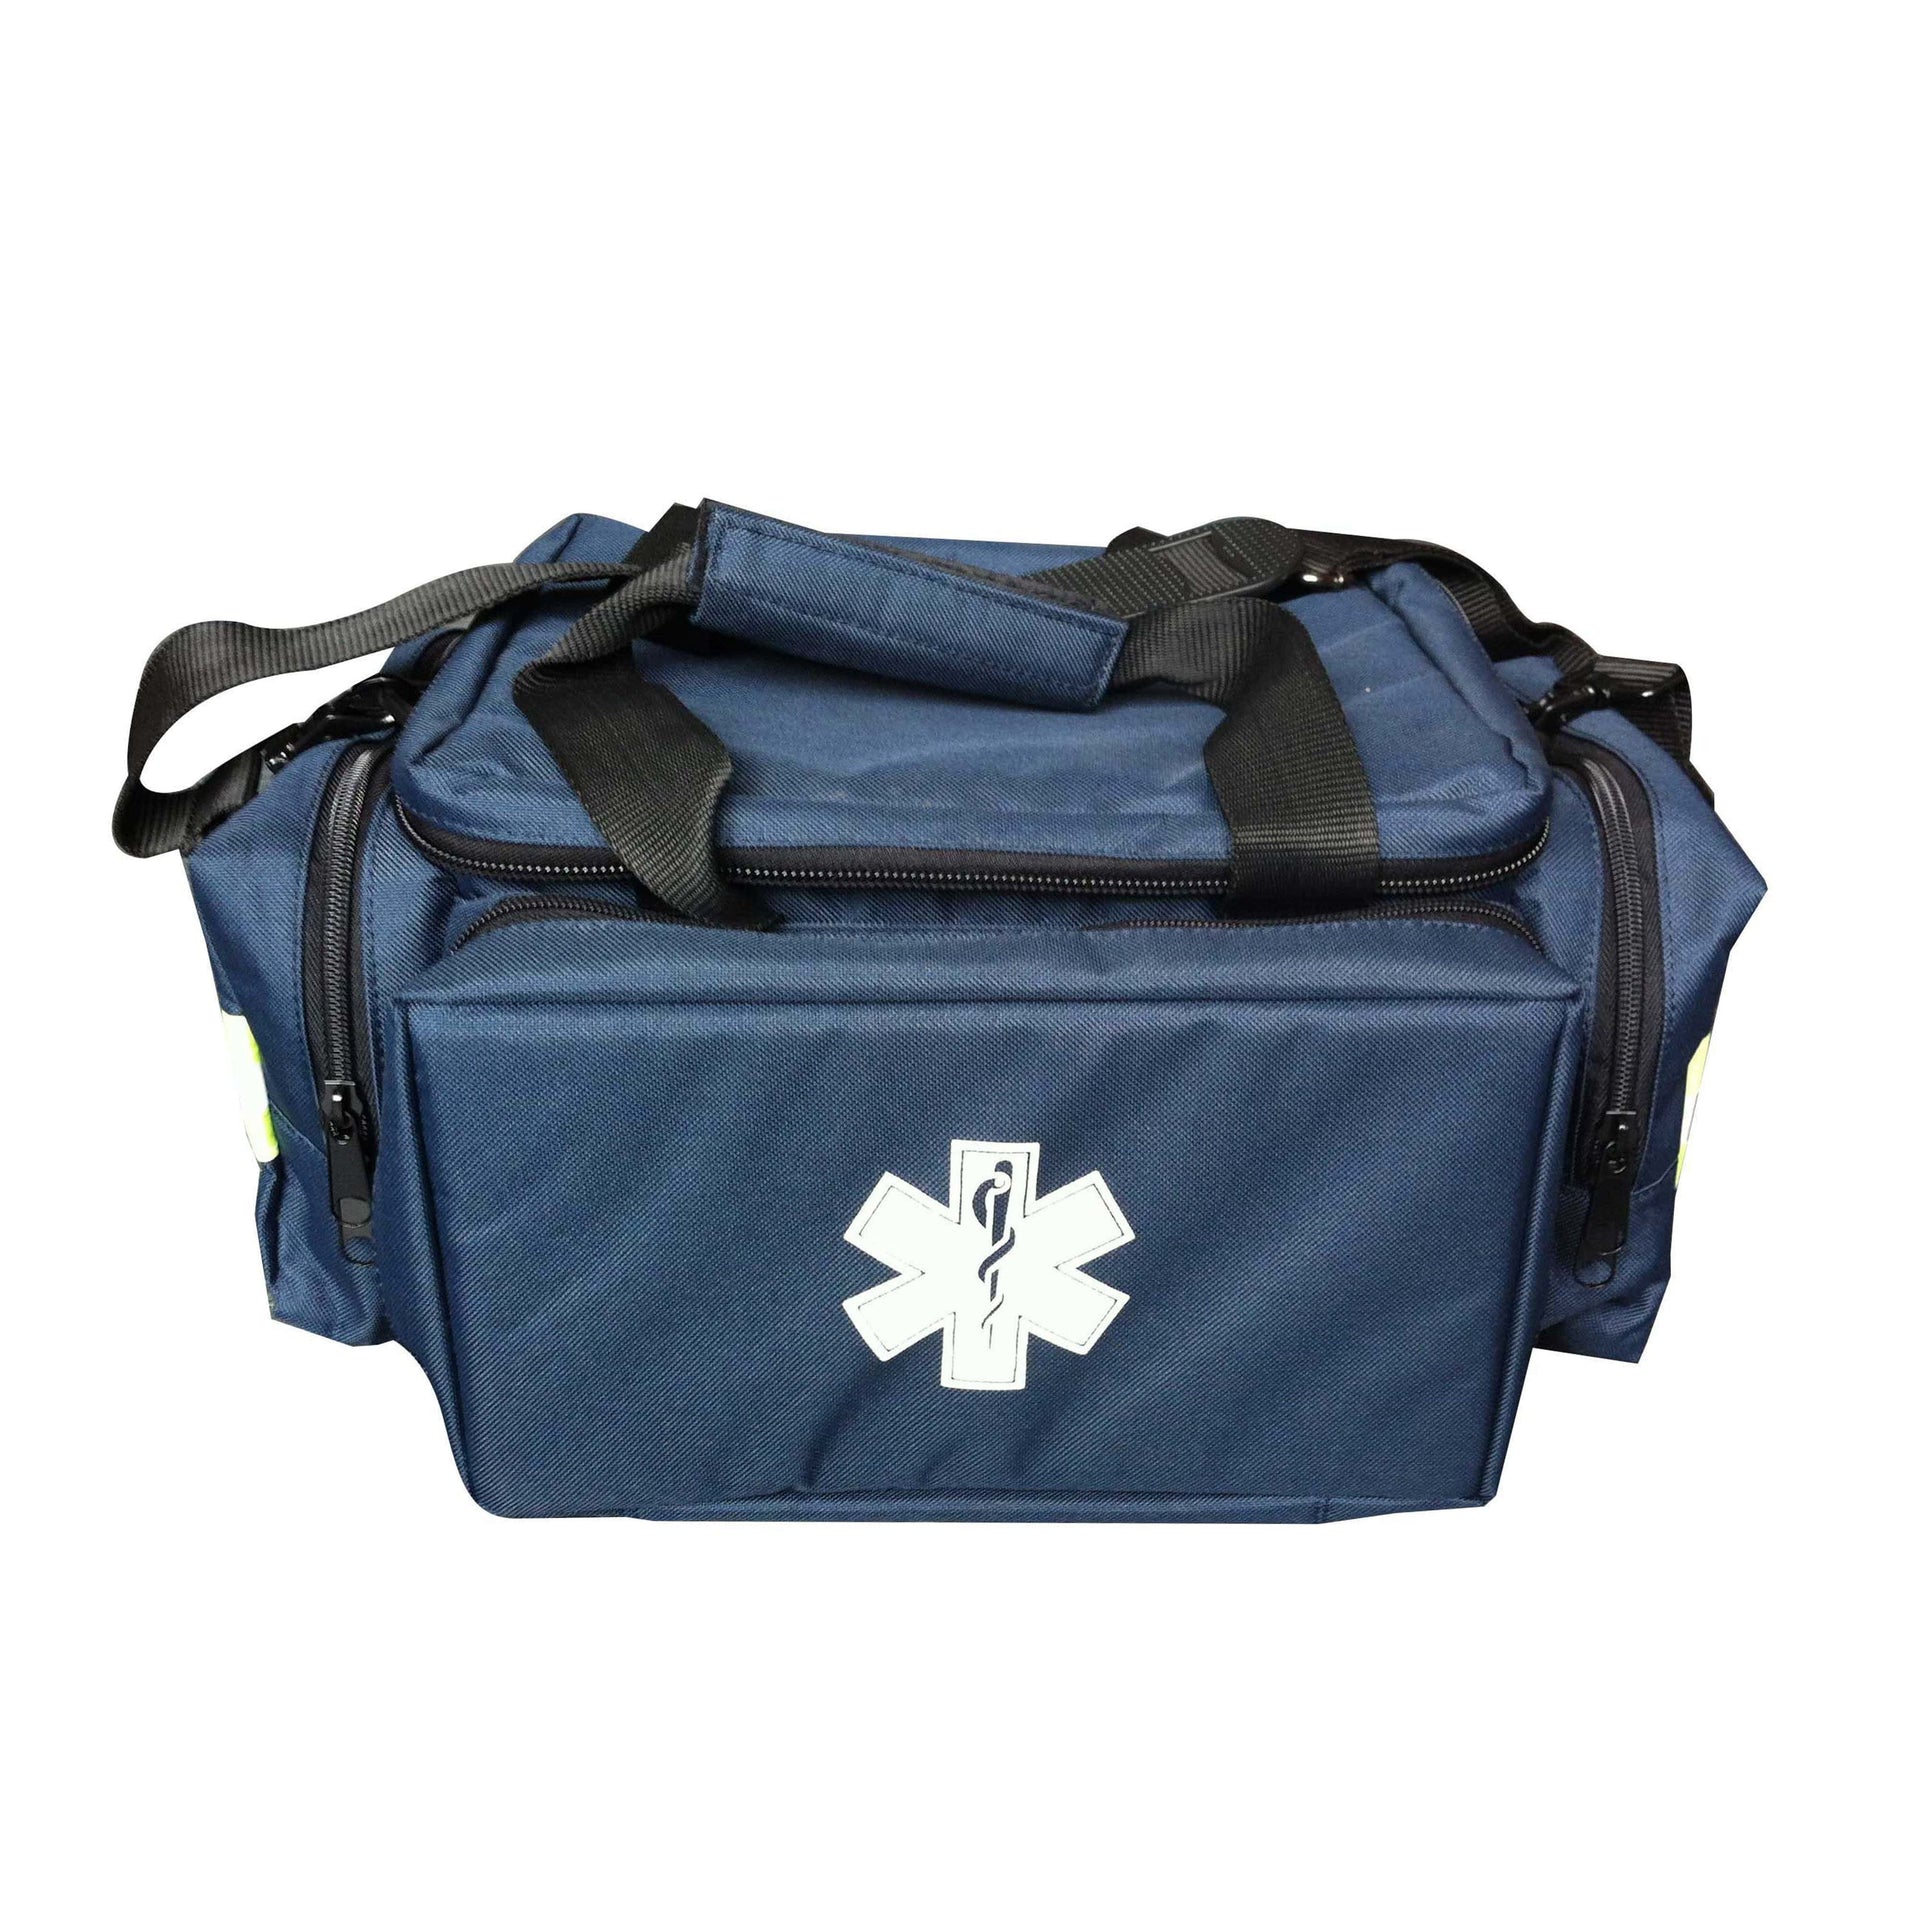 Paramedic Shop Add-Tech Pty Ltd Bag Large Trauma Bag - BAG ONLY